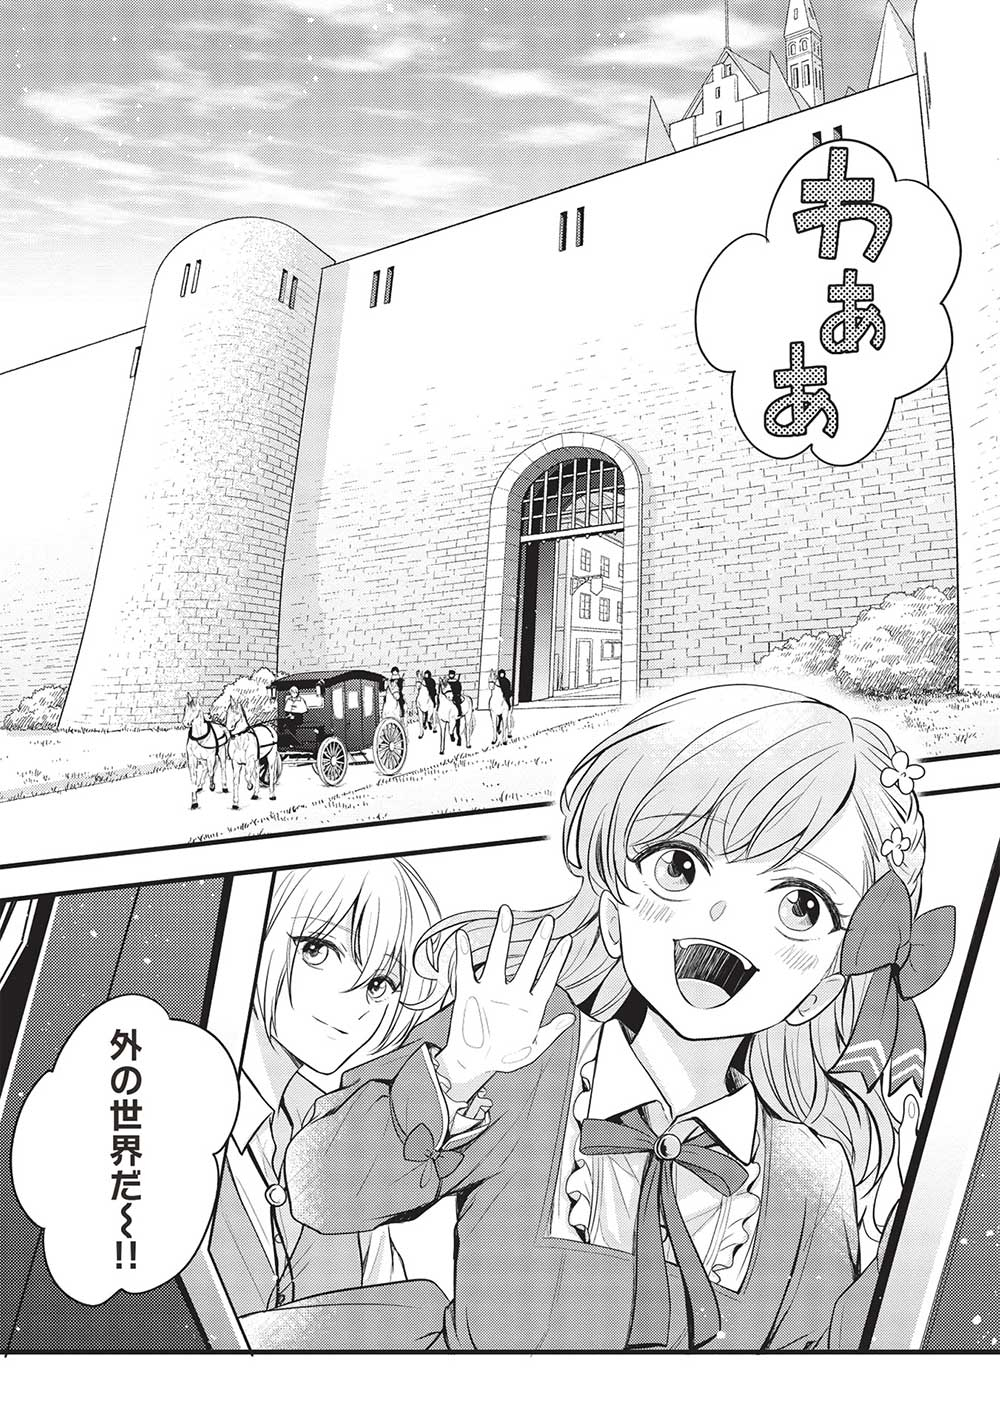 Grand Avail – Omamori no Madoushi wa Saioshi Last Boss Onii-sama wo Sukuitai - Chapter 13 - Page 1